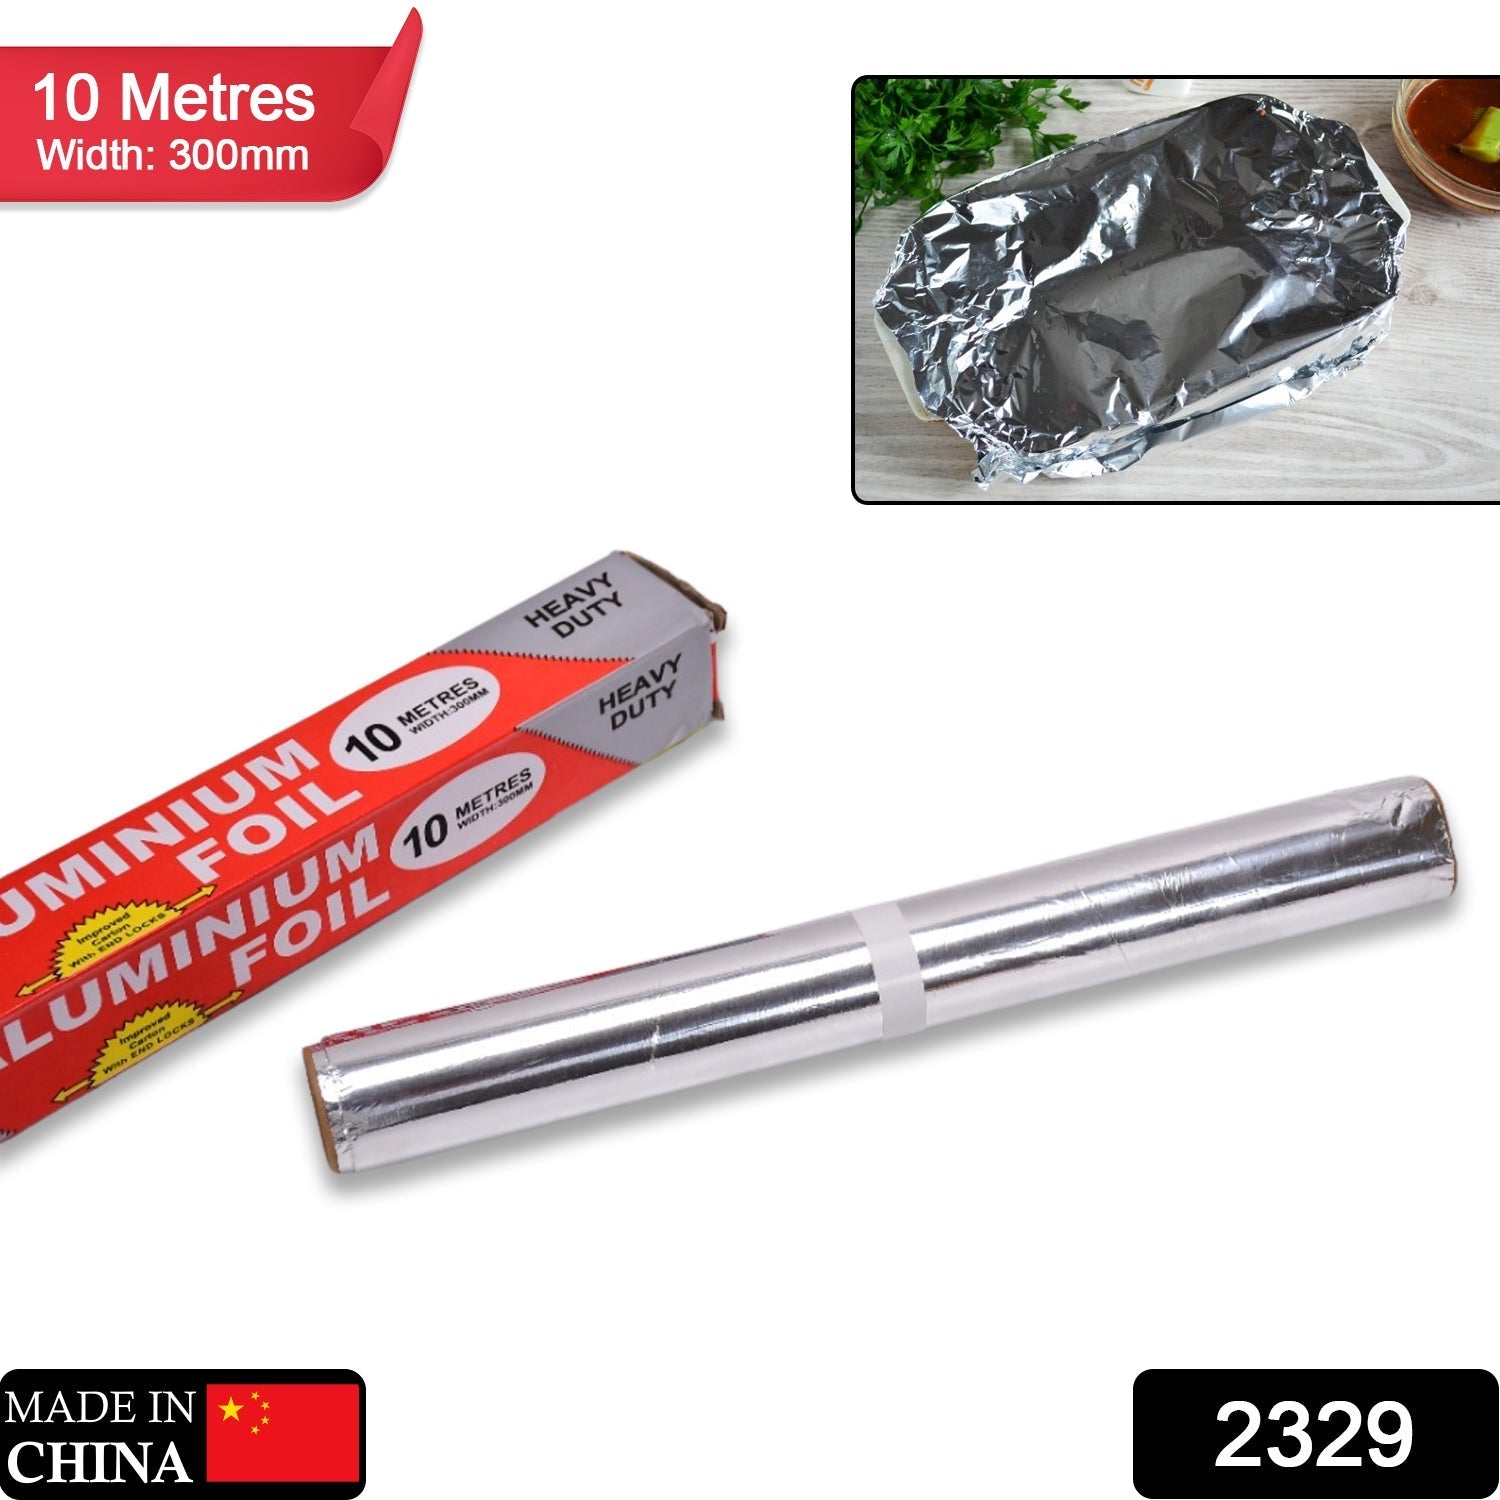 2329 Aluminum Foil Roll Heavy Duty Non Stick Thick Aluminum Foil Sheet Baking Grilling Tool (10mX300mm) 